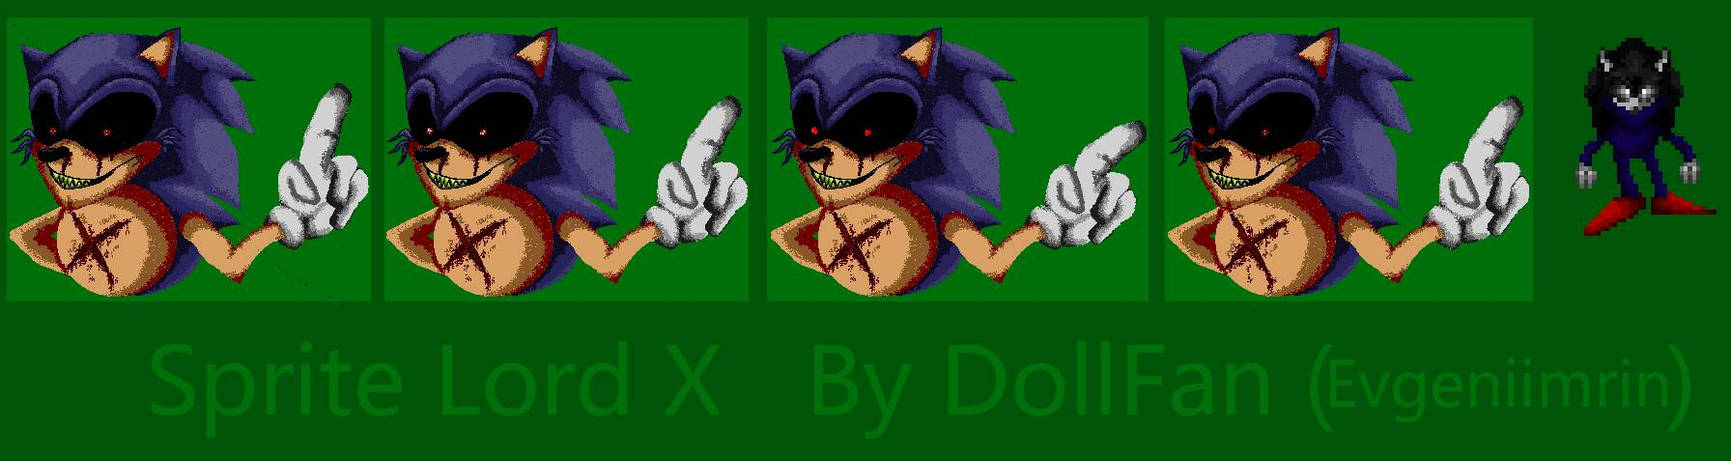 Lord x sprites Sonic.EXE PC PORT by evgeniimurin on DeviantArt